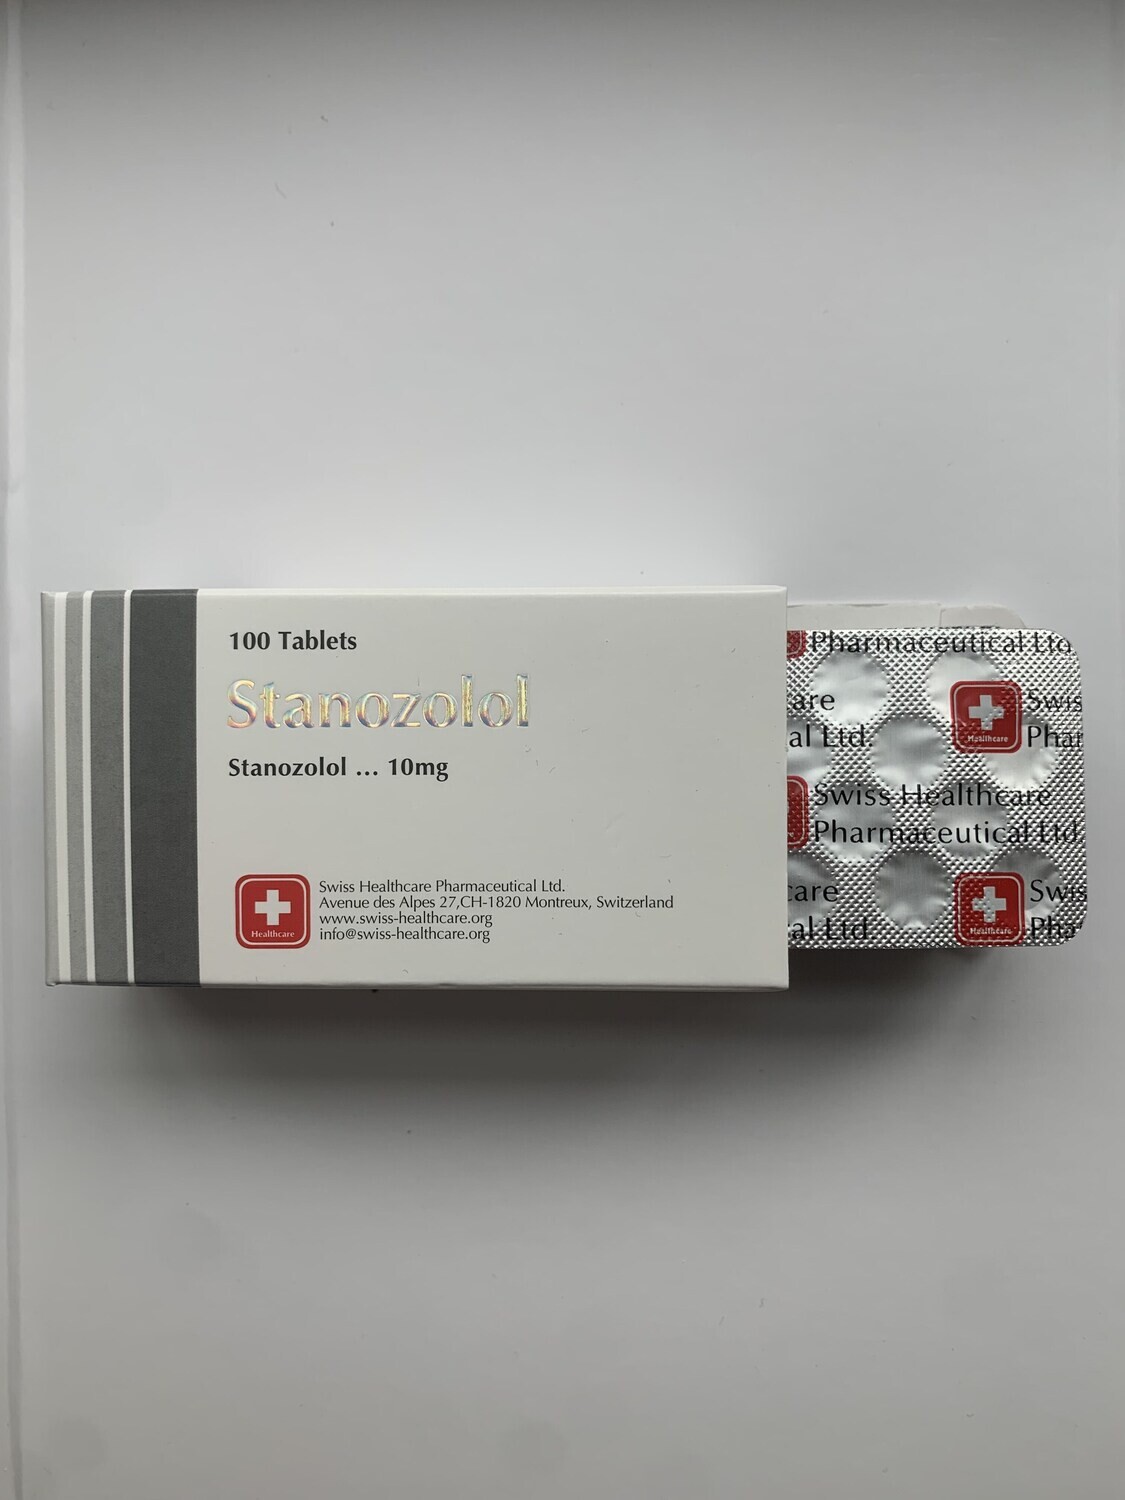 SWISS - Stanazolol (Winstrol) 10mg x 100 tablets